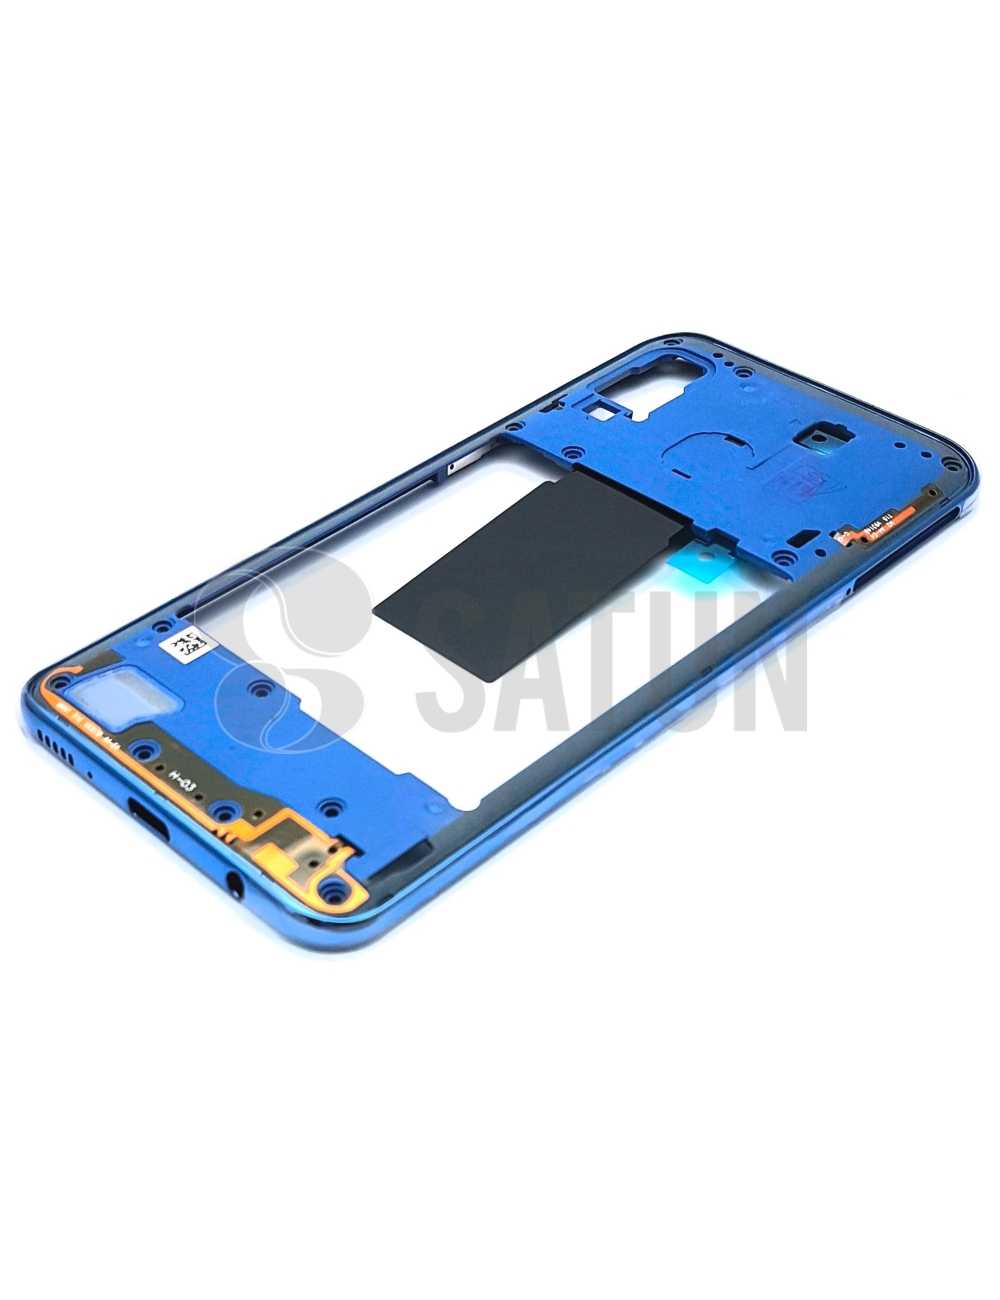 Carcasa intermedia Samsung Galaxy A40 azul